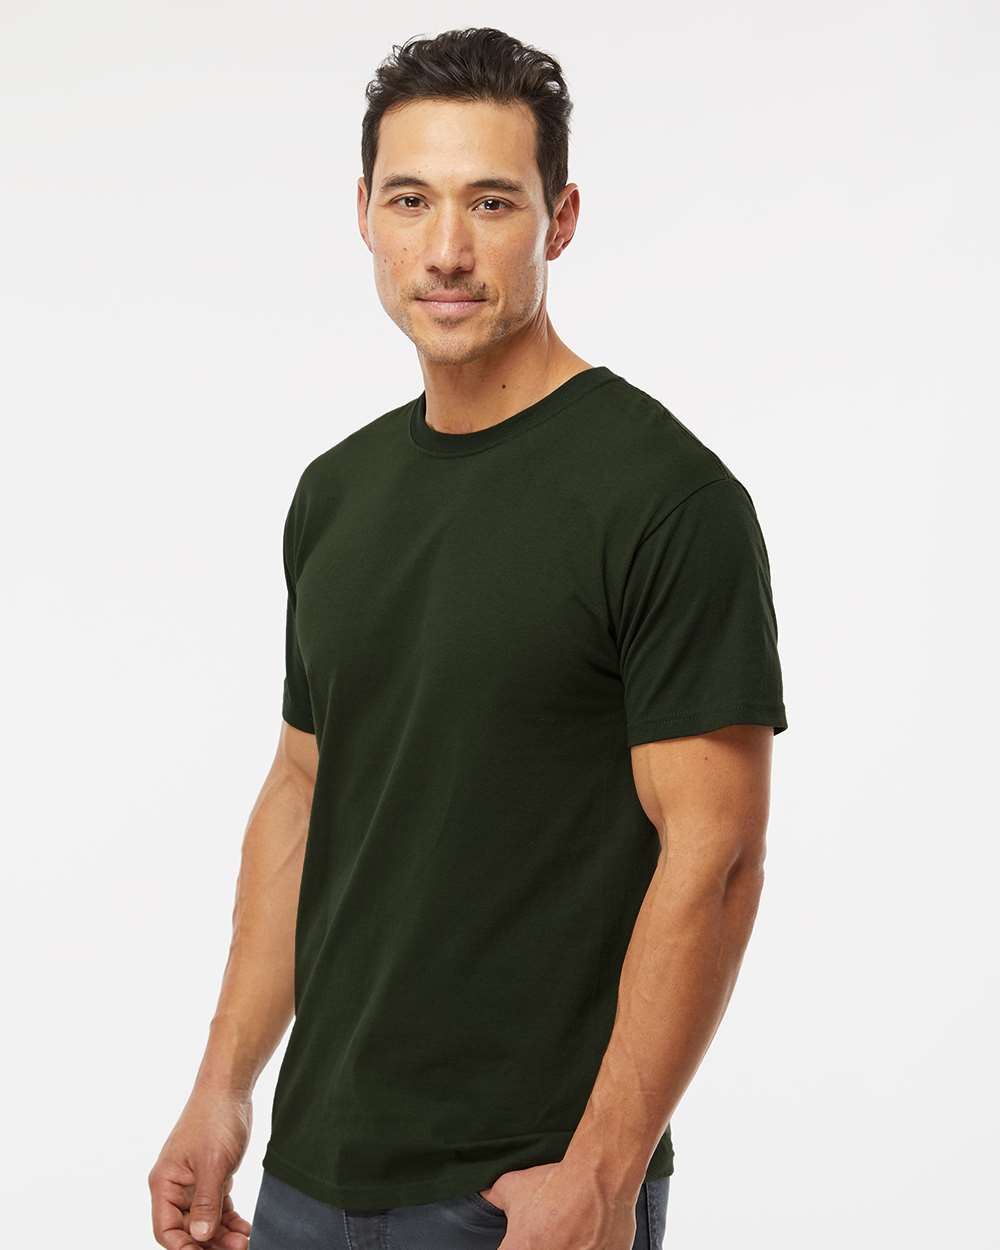 M&O Men Short Sleeve Cotton Light Soft Touch T-Shirt Blank Plain 4800 up to  5XL